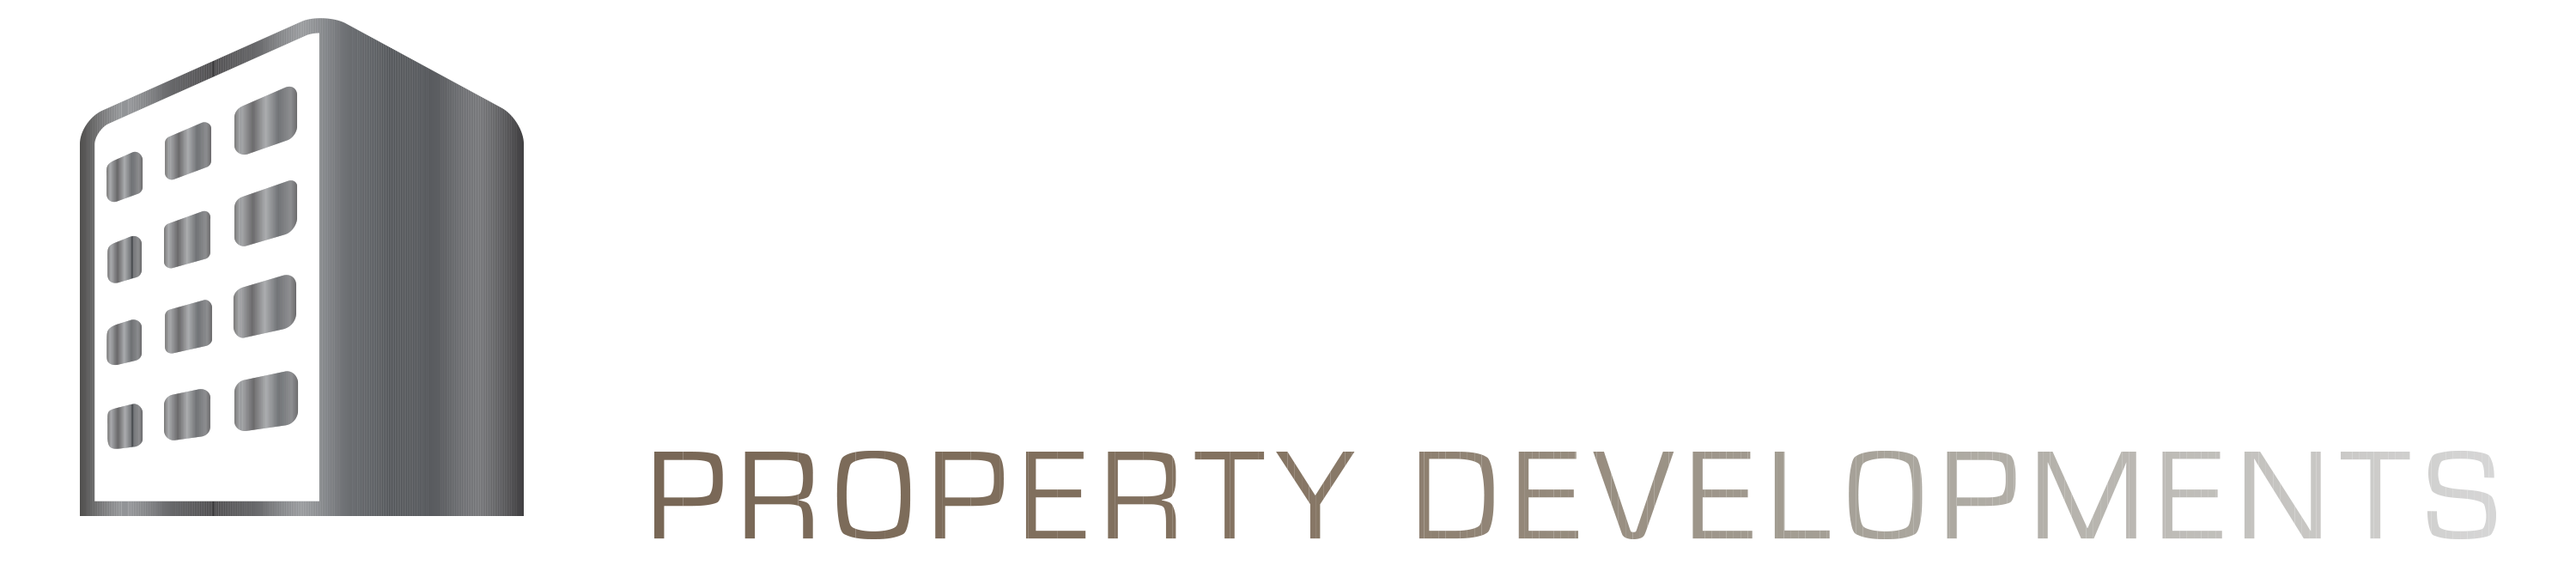 Hudson Property Development